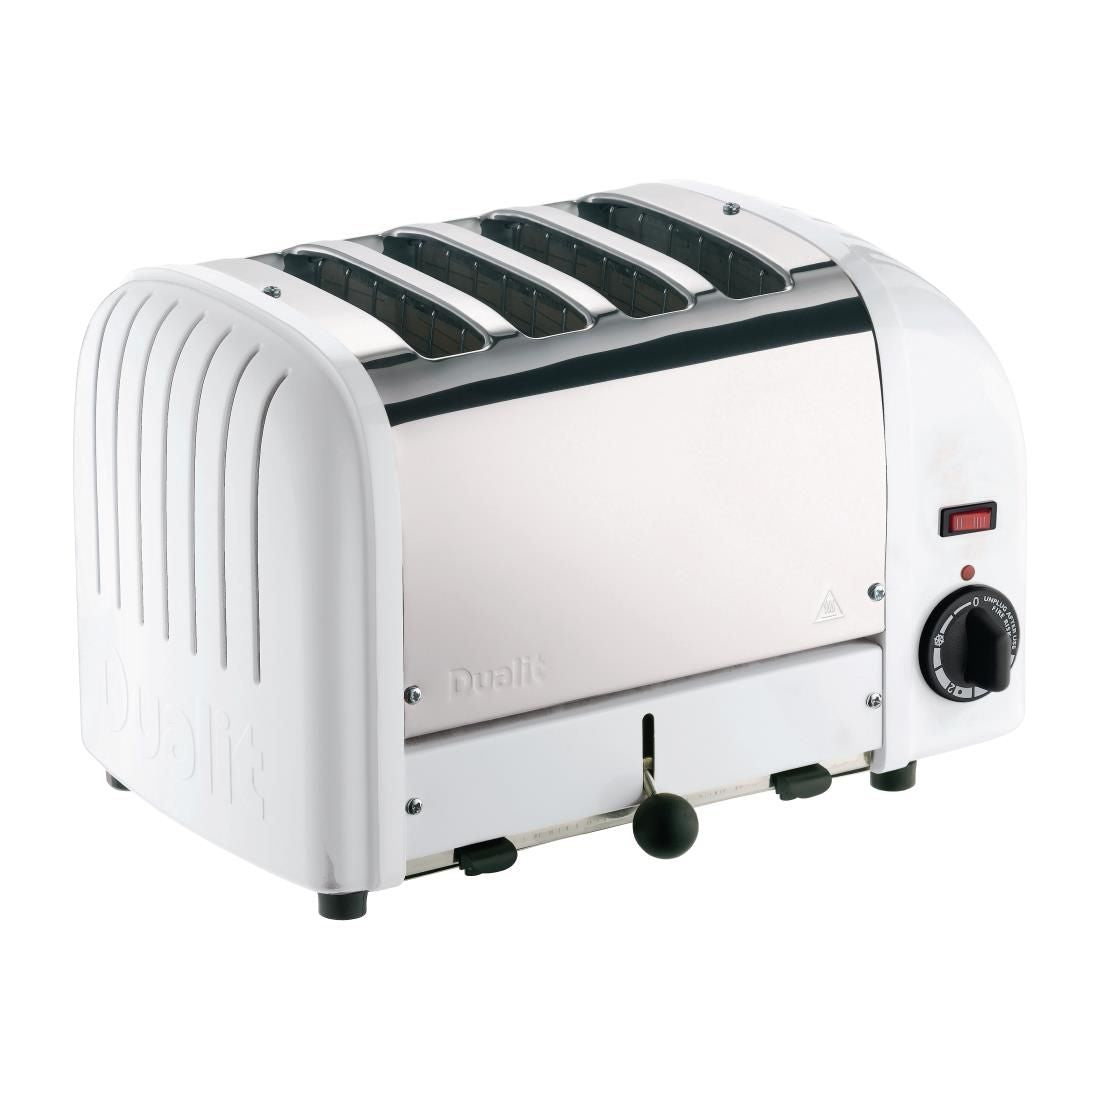 Dualit 2 x 2 Combi Vario 4 Slice Toaster White 42177 JD Catering Equipment Solutions Ltd